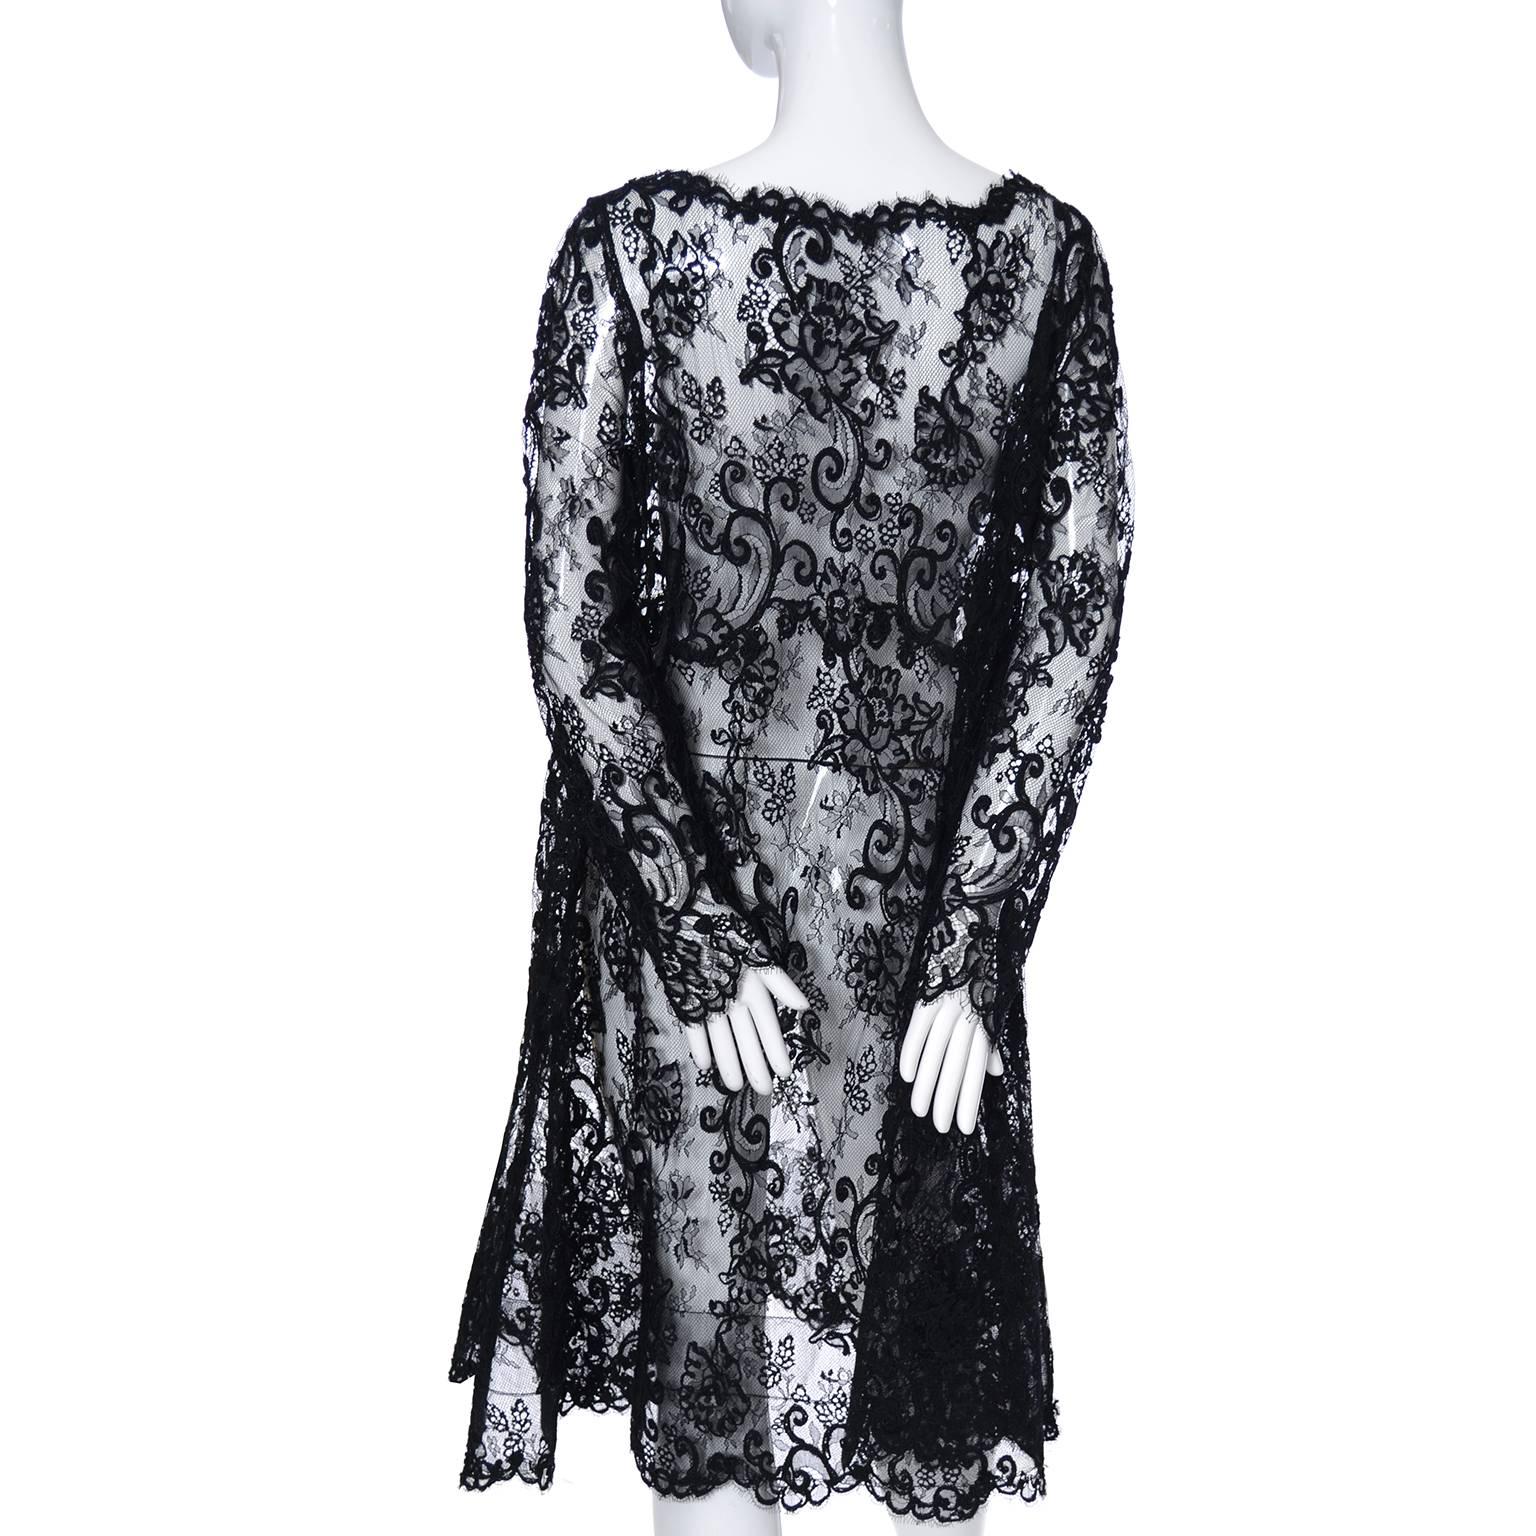 All Lace Oscar de la Renta Dress Black Evening Vintage Trapeze Dress at ...